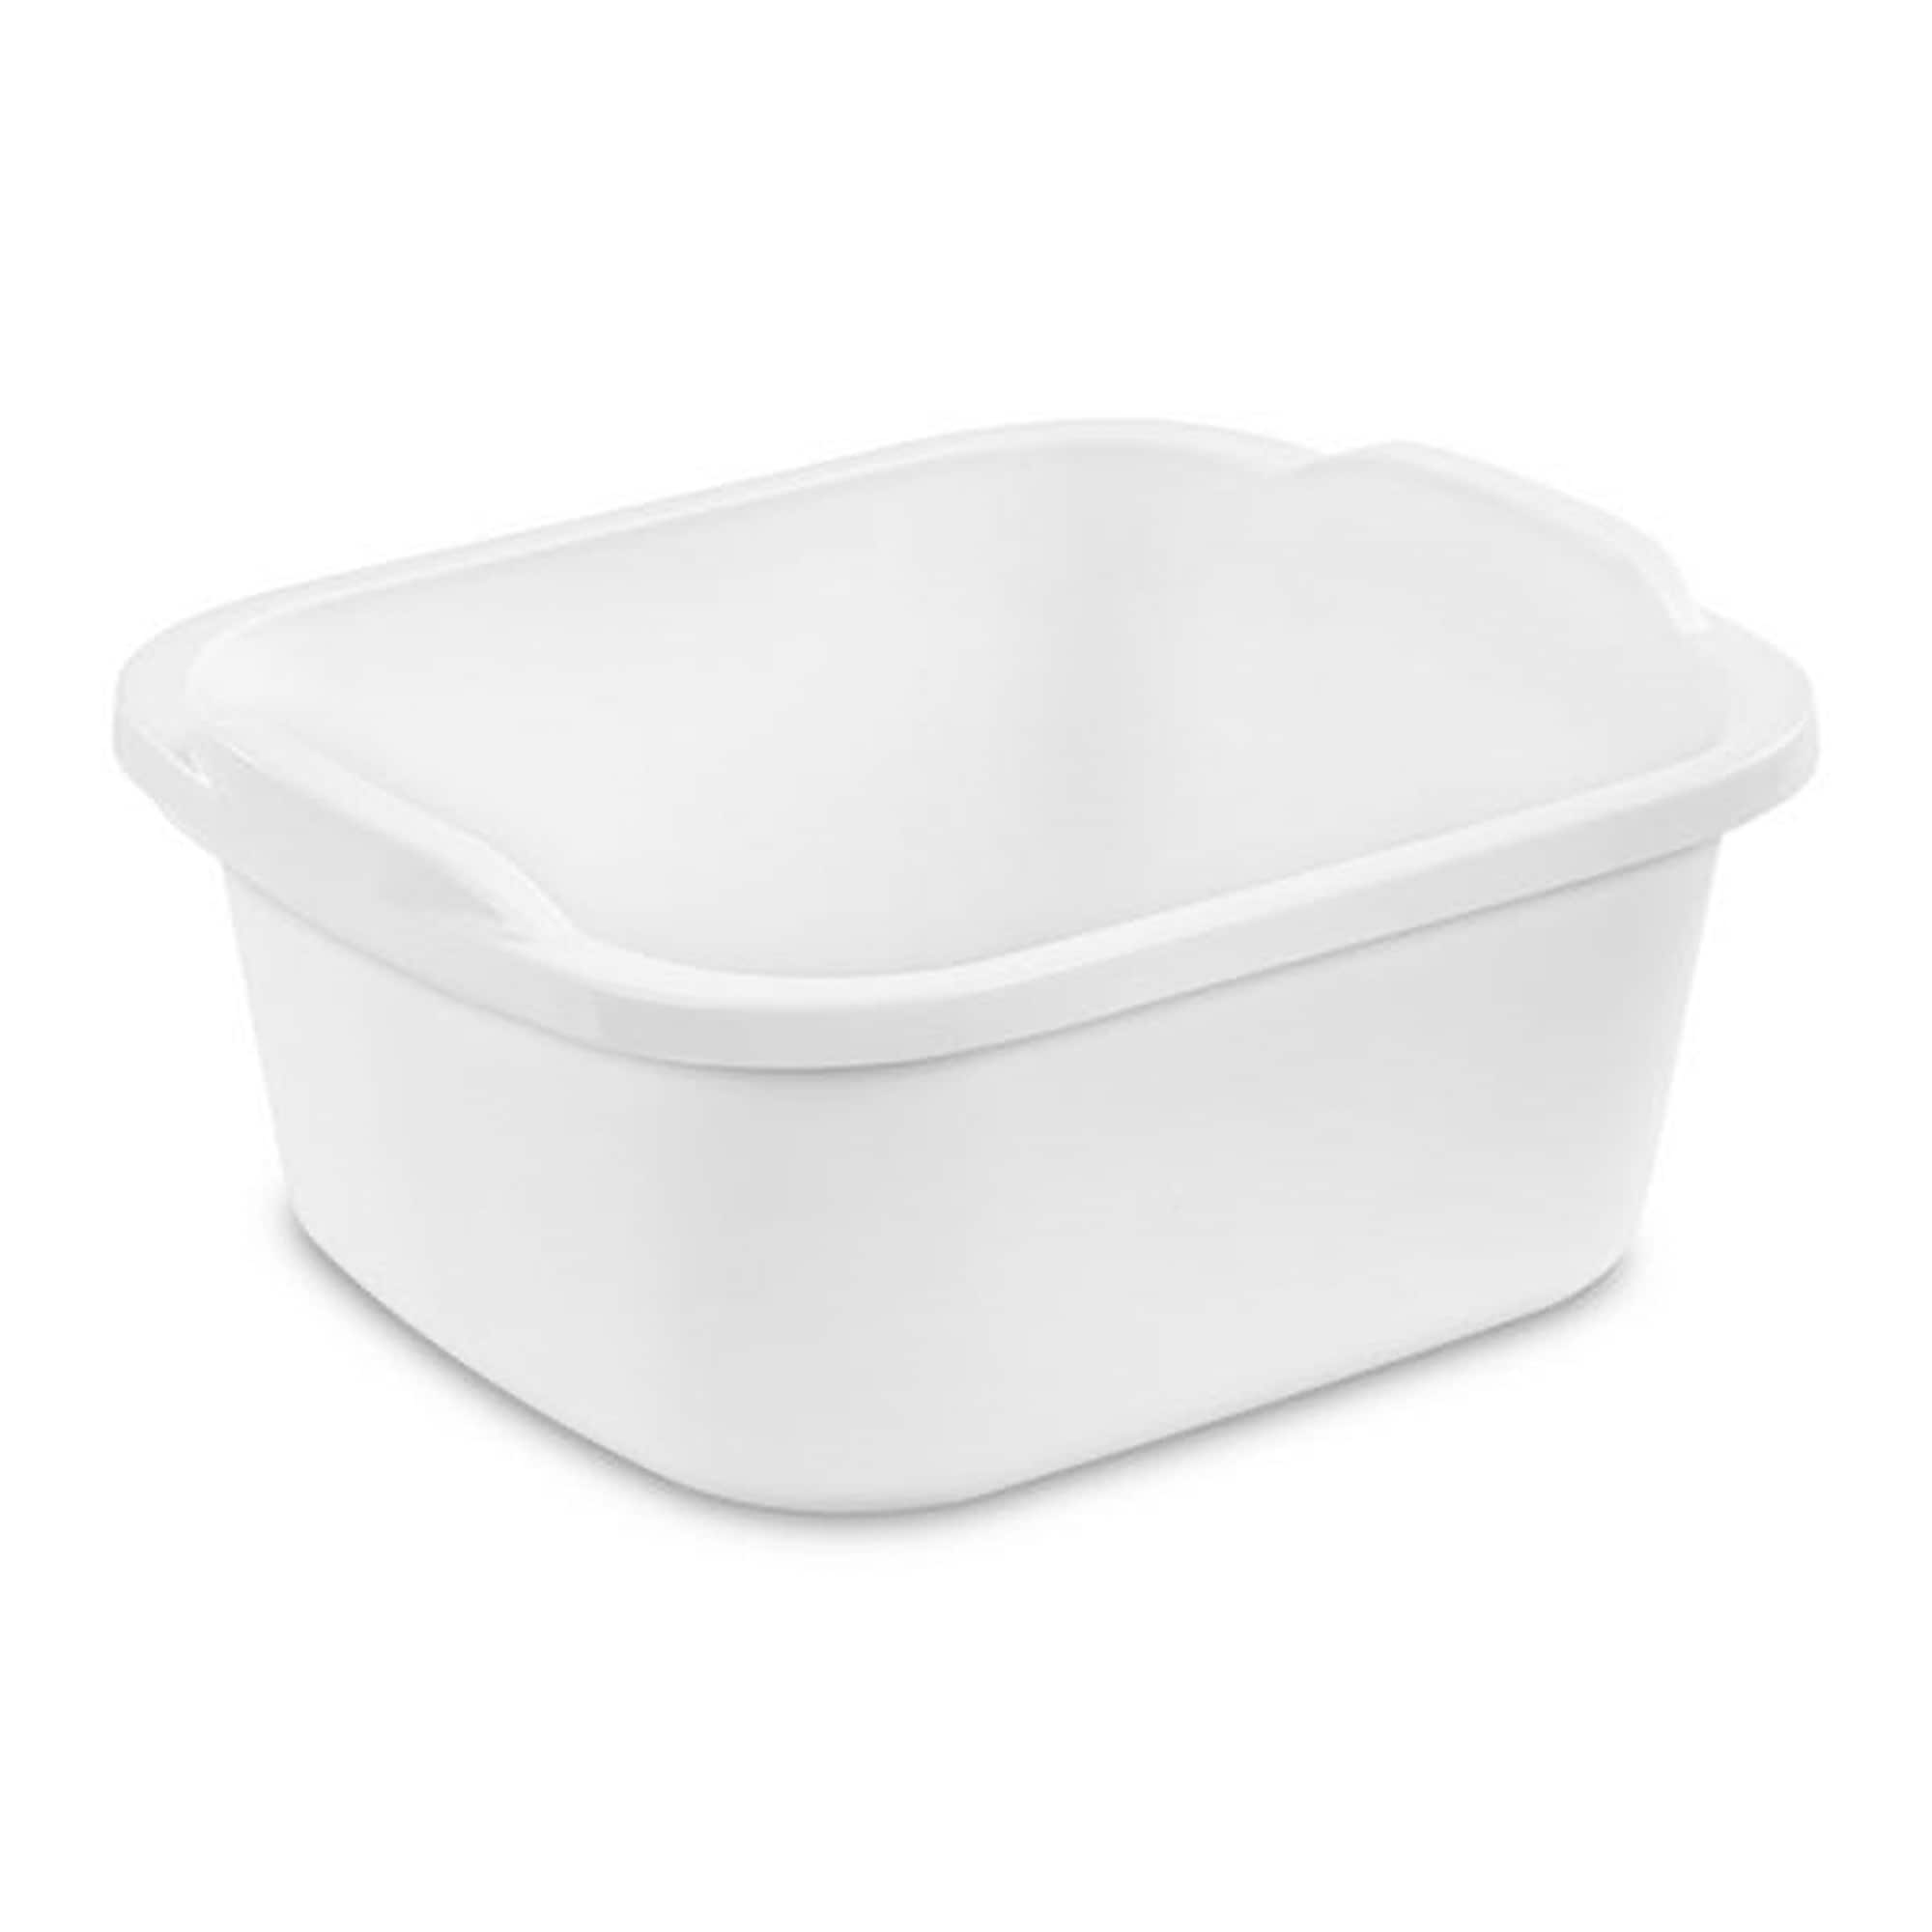 STERILITE White 2-Piece Small Sink Set Dish Rack Drainer for RV